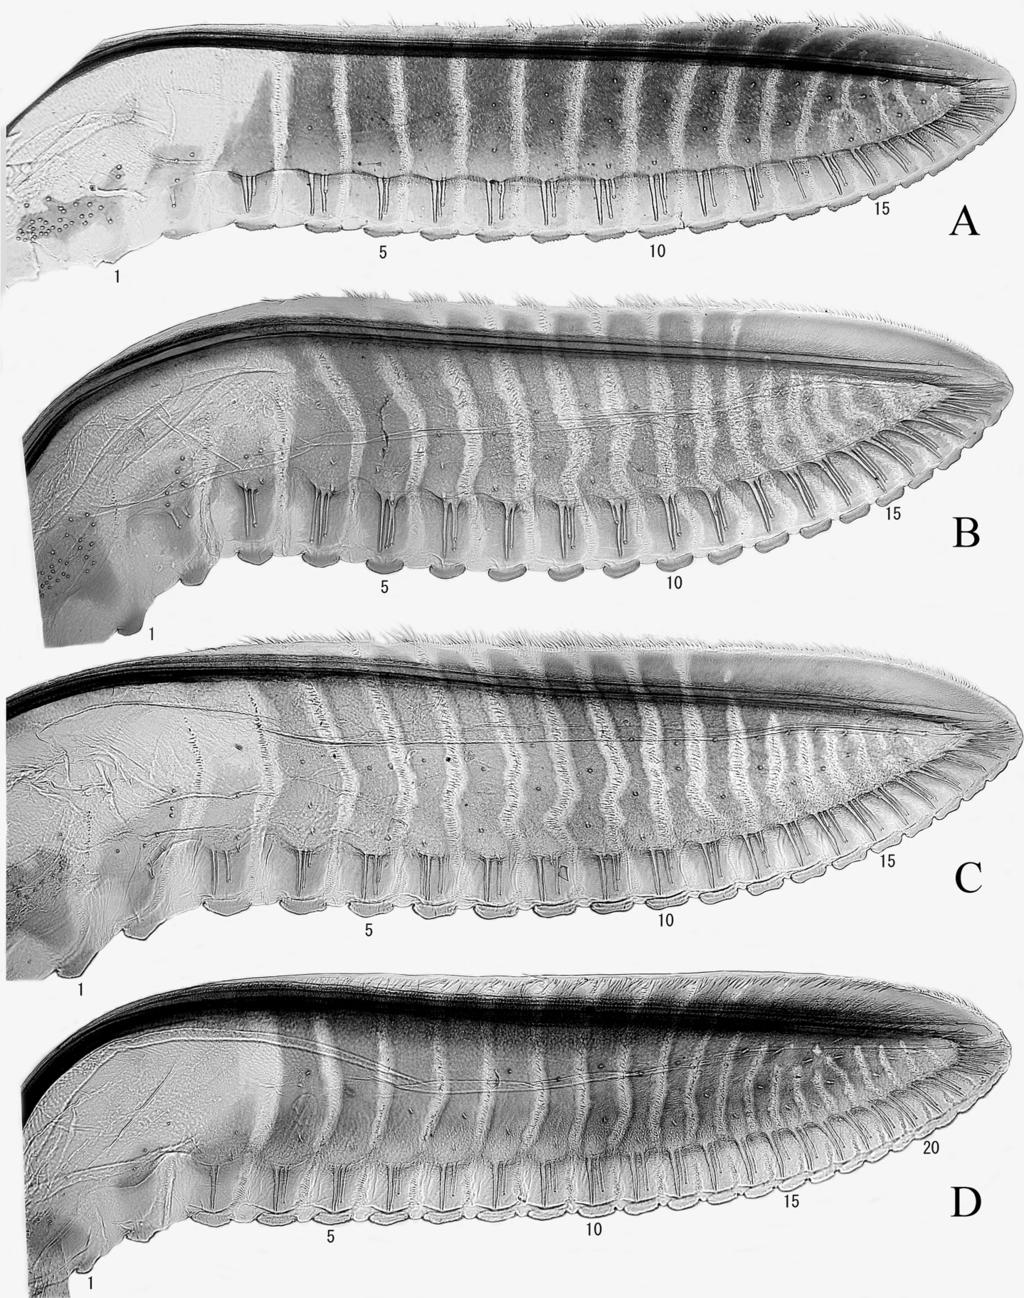 Sawflies of Arge thaumatopygia Group 141 Fig. 9. Lancets, lateral view. A, Arge metalloflagella, holotype; B, A. curvatantenna, Jiuwanshan; C, do., Andaihou; D, A. meliosmae, paratype from Miyagi.